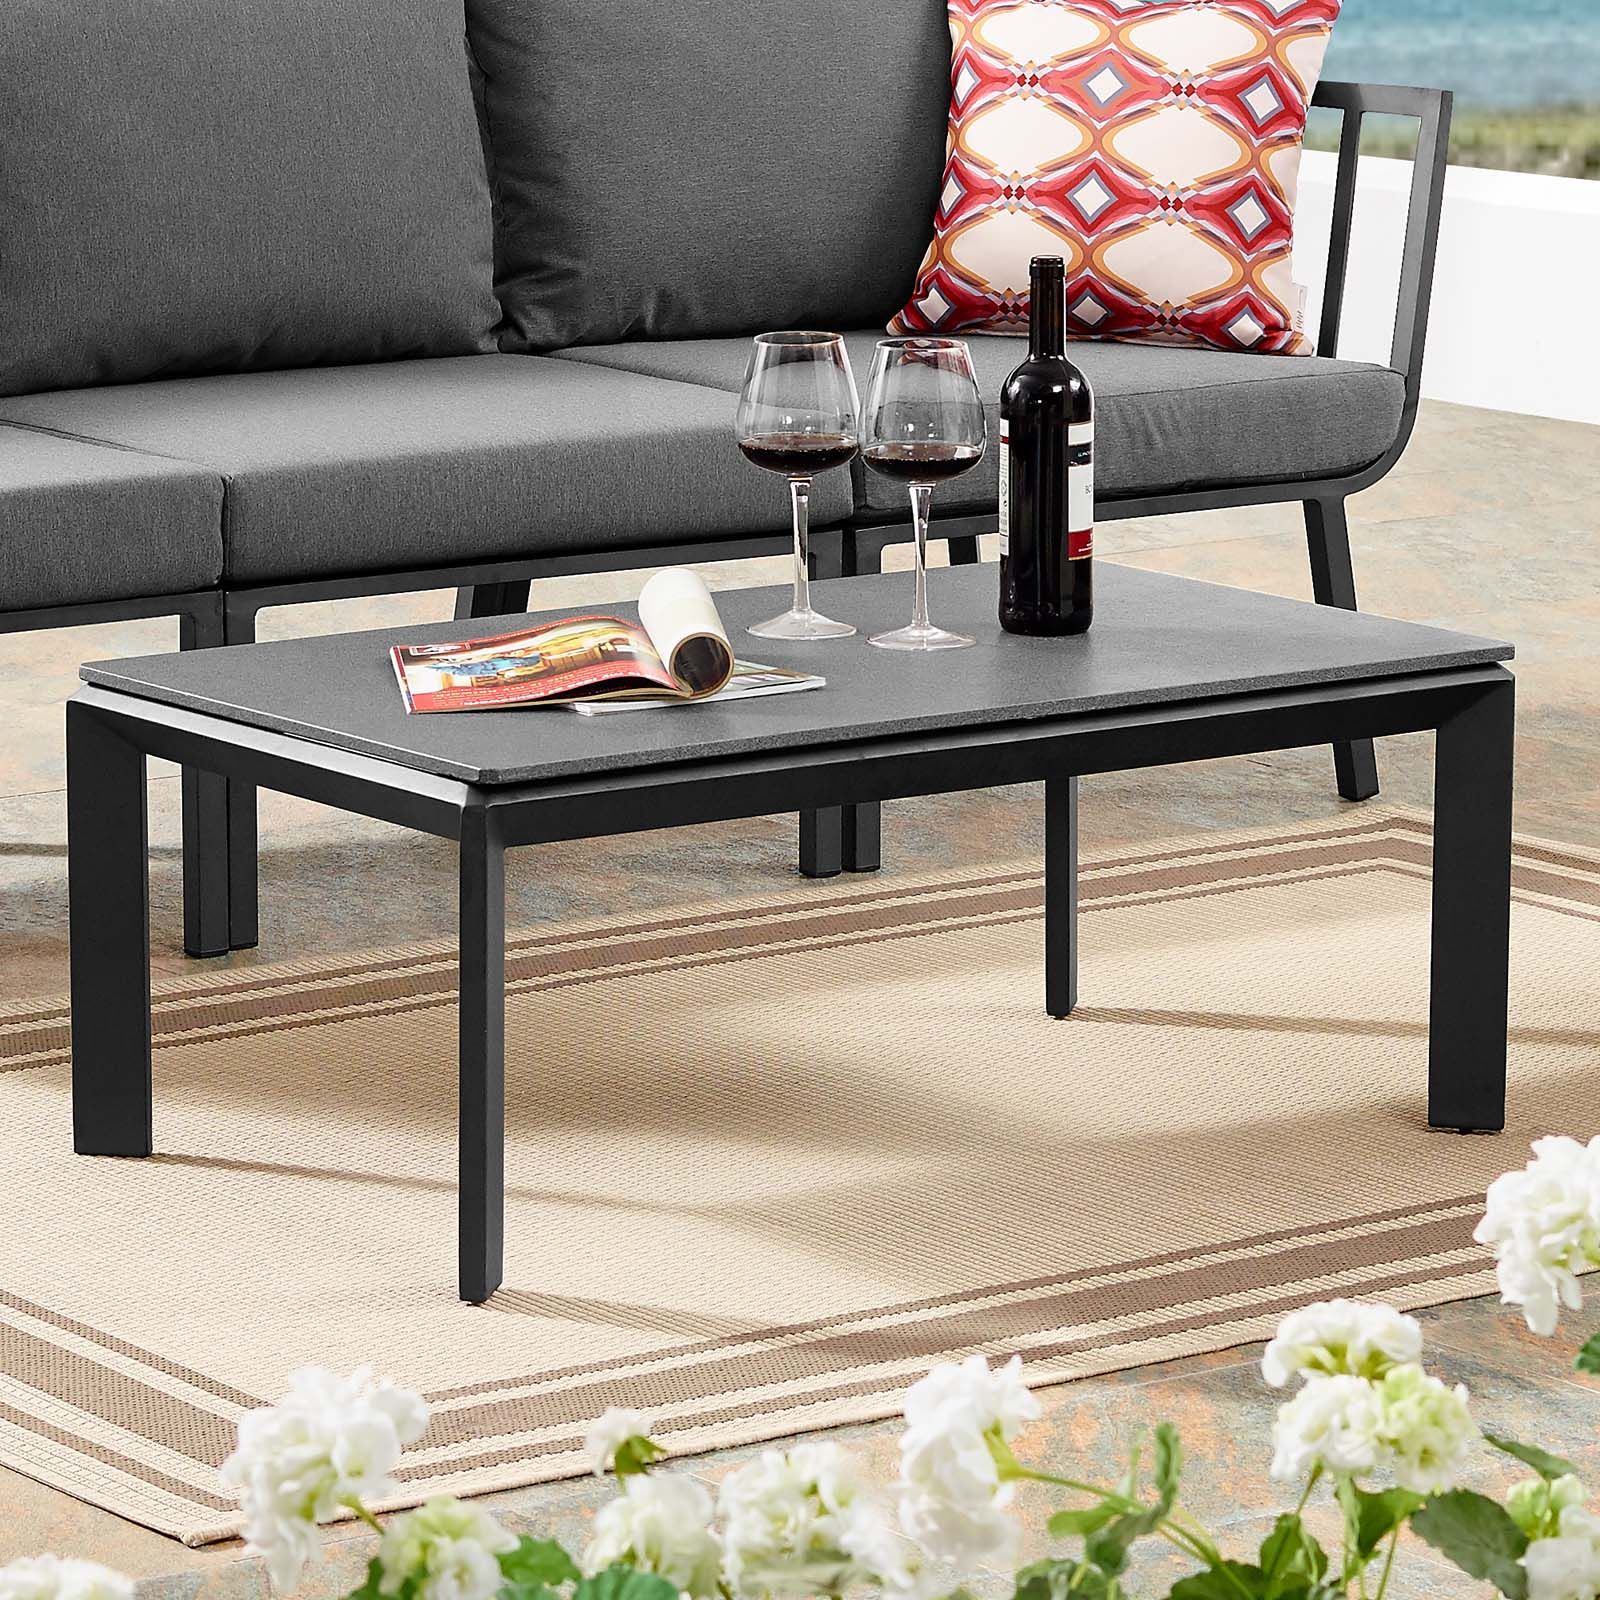 Riverside Aluminum Outdoor Patio Coffee Table Gray With Outdoor Coffee Tables With Storage (View 5 of 15)